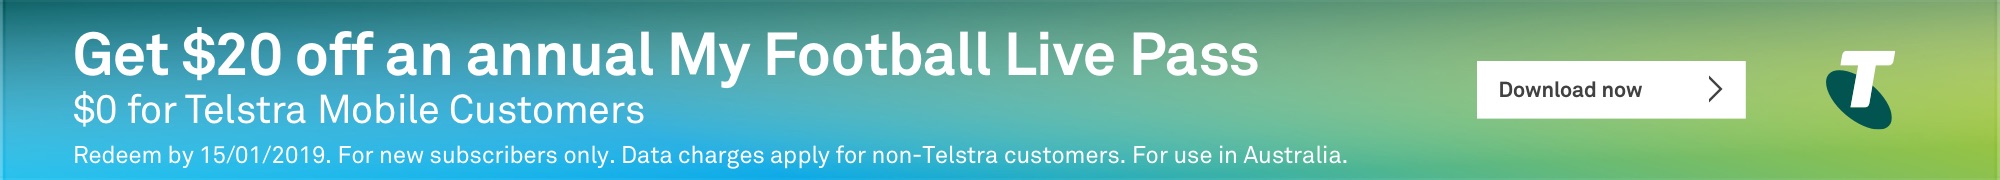 Telstra Banner HAL